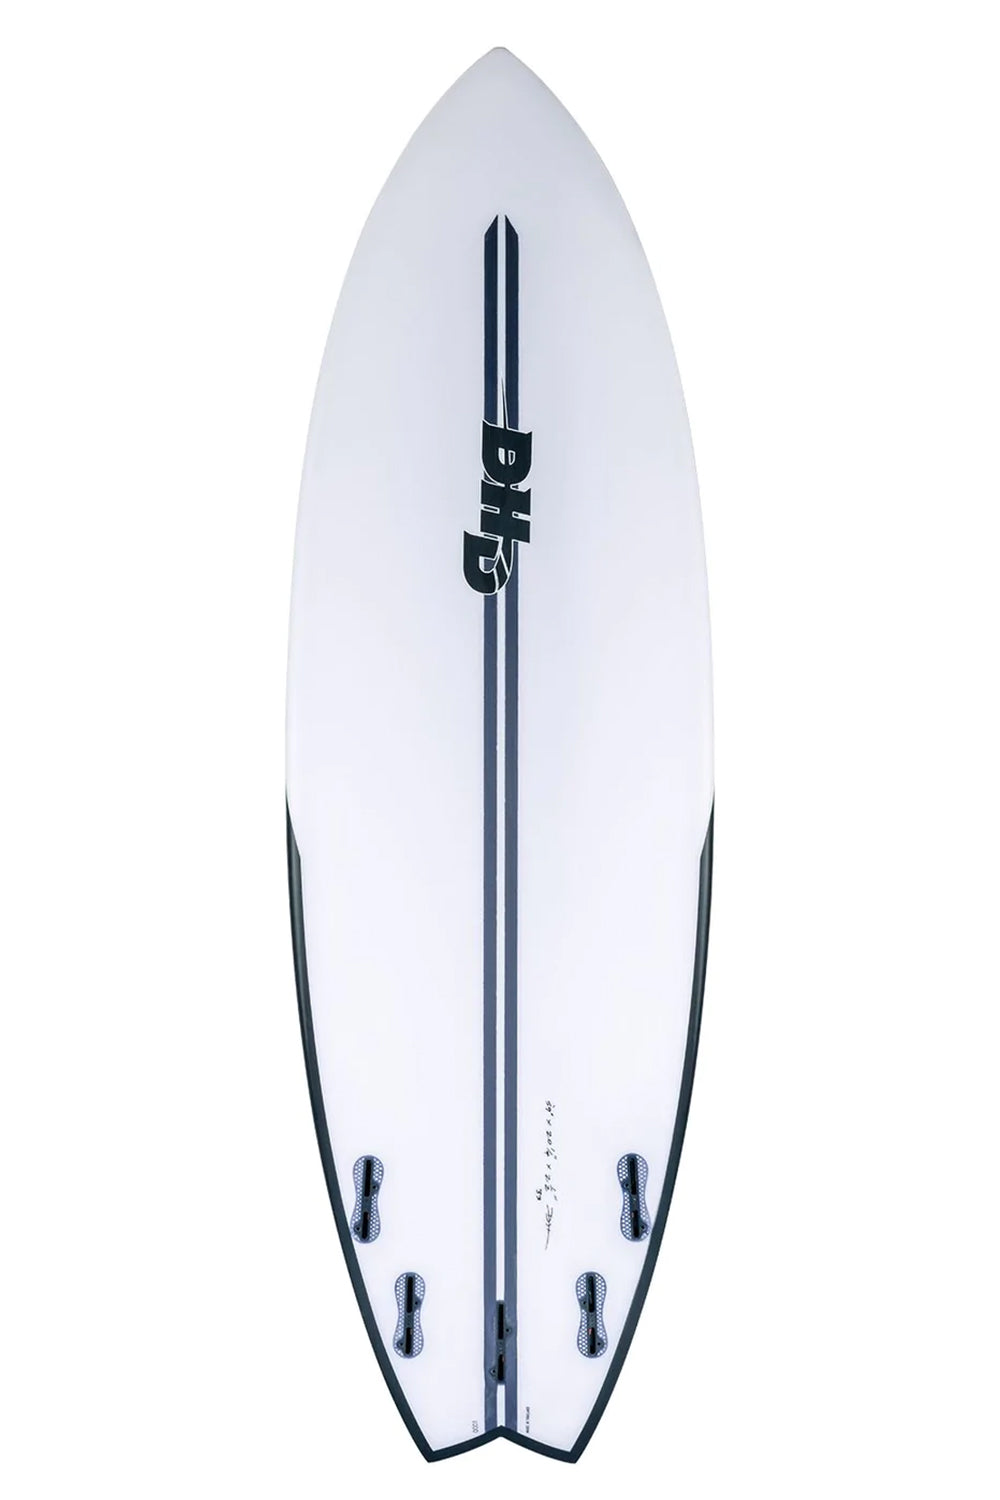 DHD Phoenix EPS Surfboard - Swallow Tail